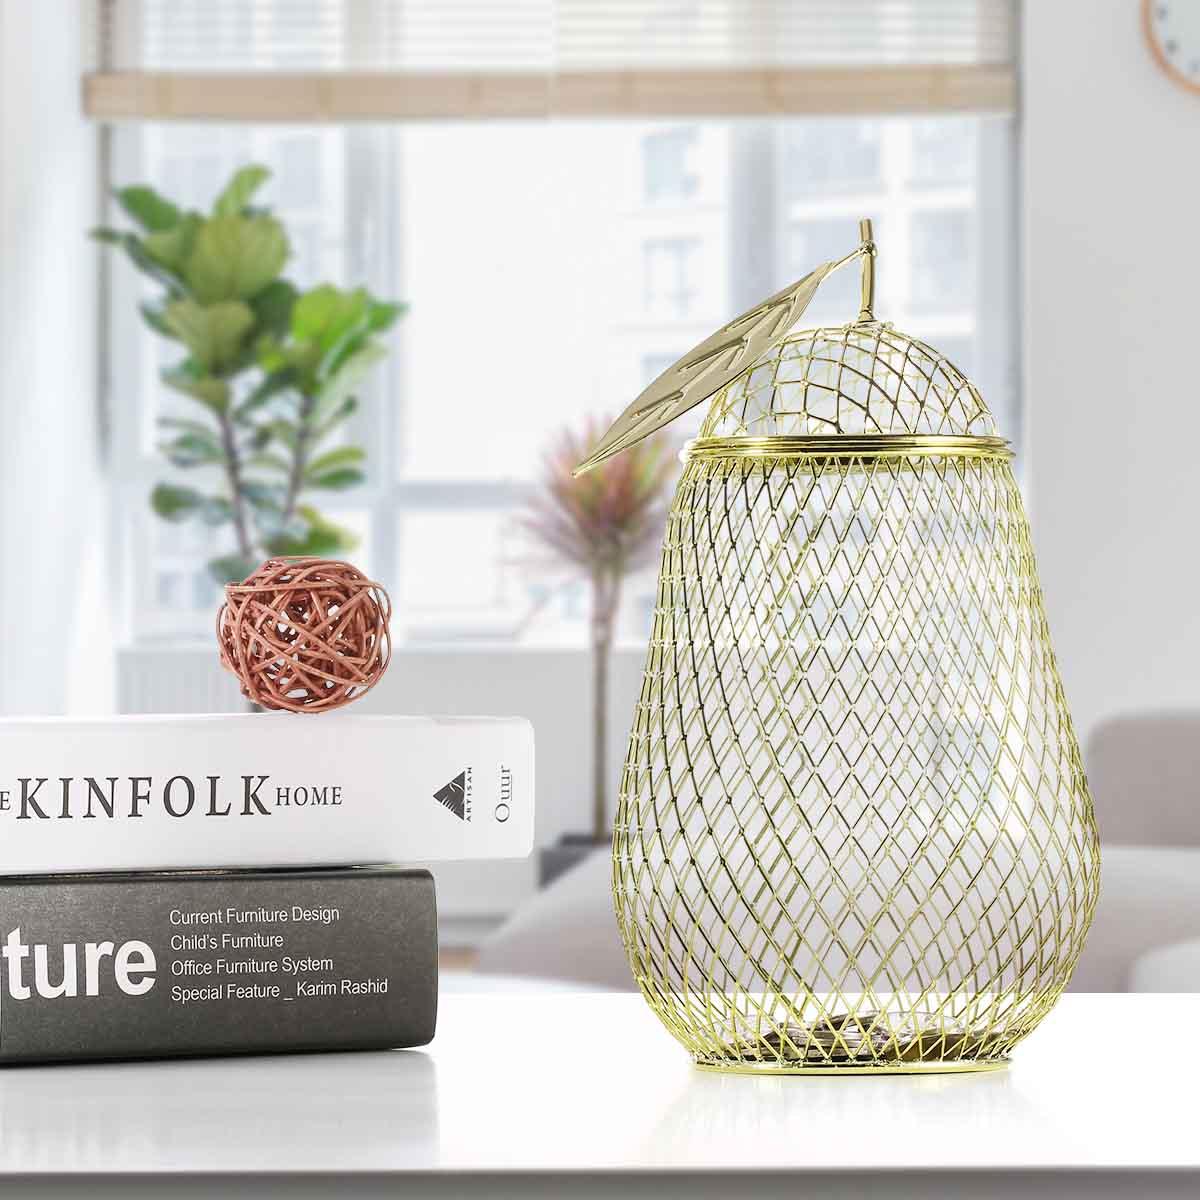 Golden Pear Storage Jar: Playful and Whimsical Decorative Holder